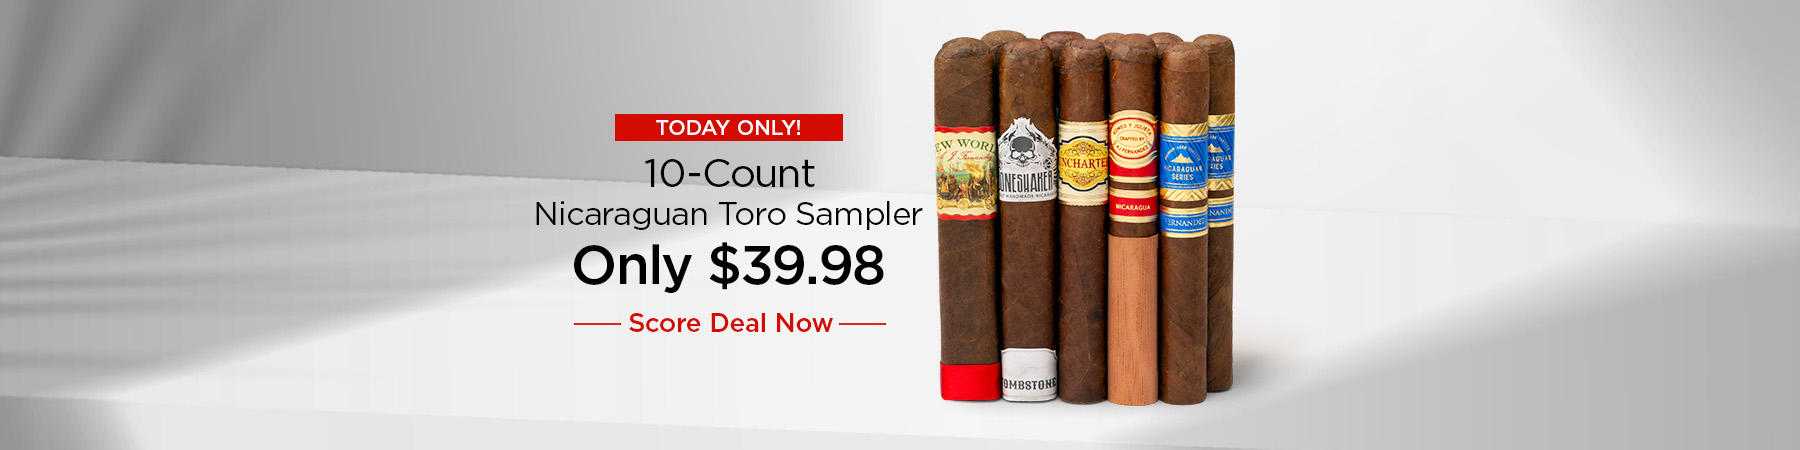 10-Count Nicaraguan Toro Sampler Only $39.98